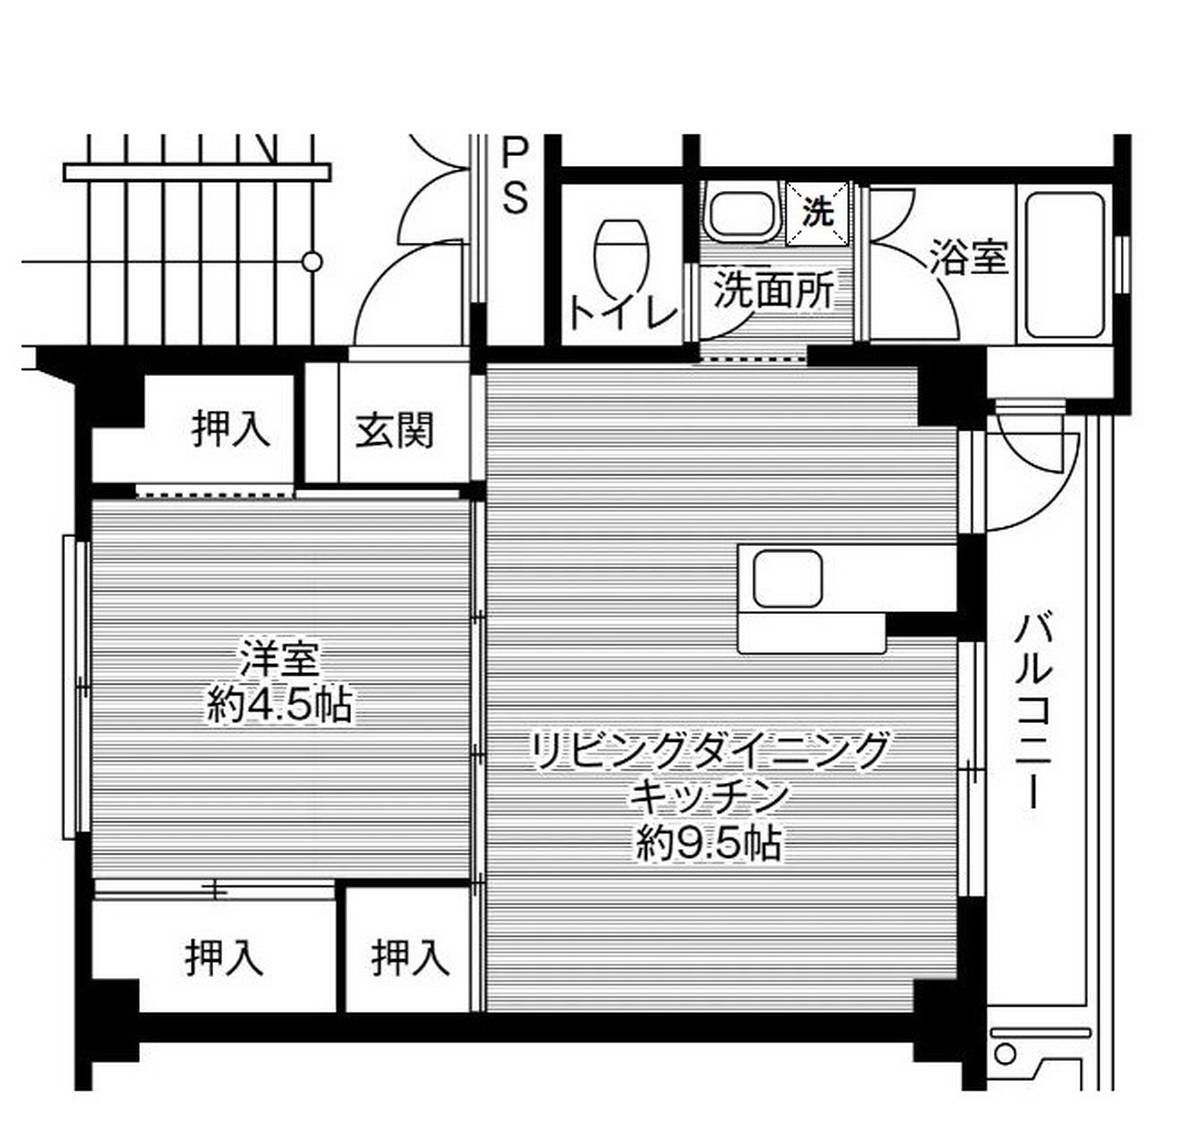 1LDK floorplan of Village House Shuzenji in Izu-shi